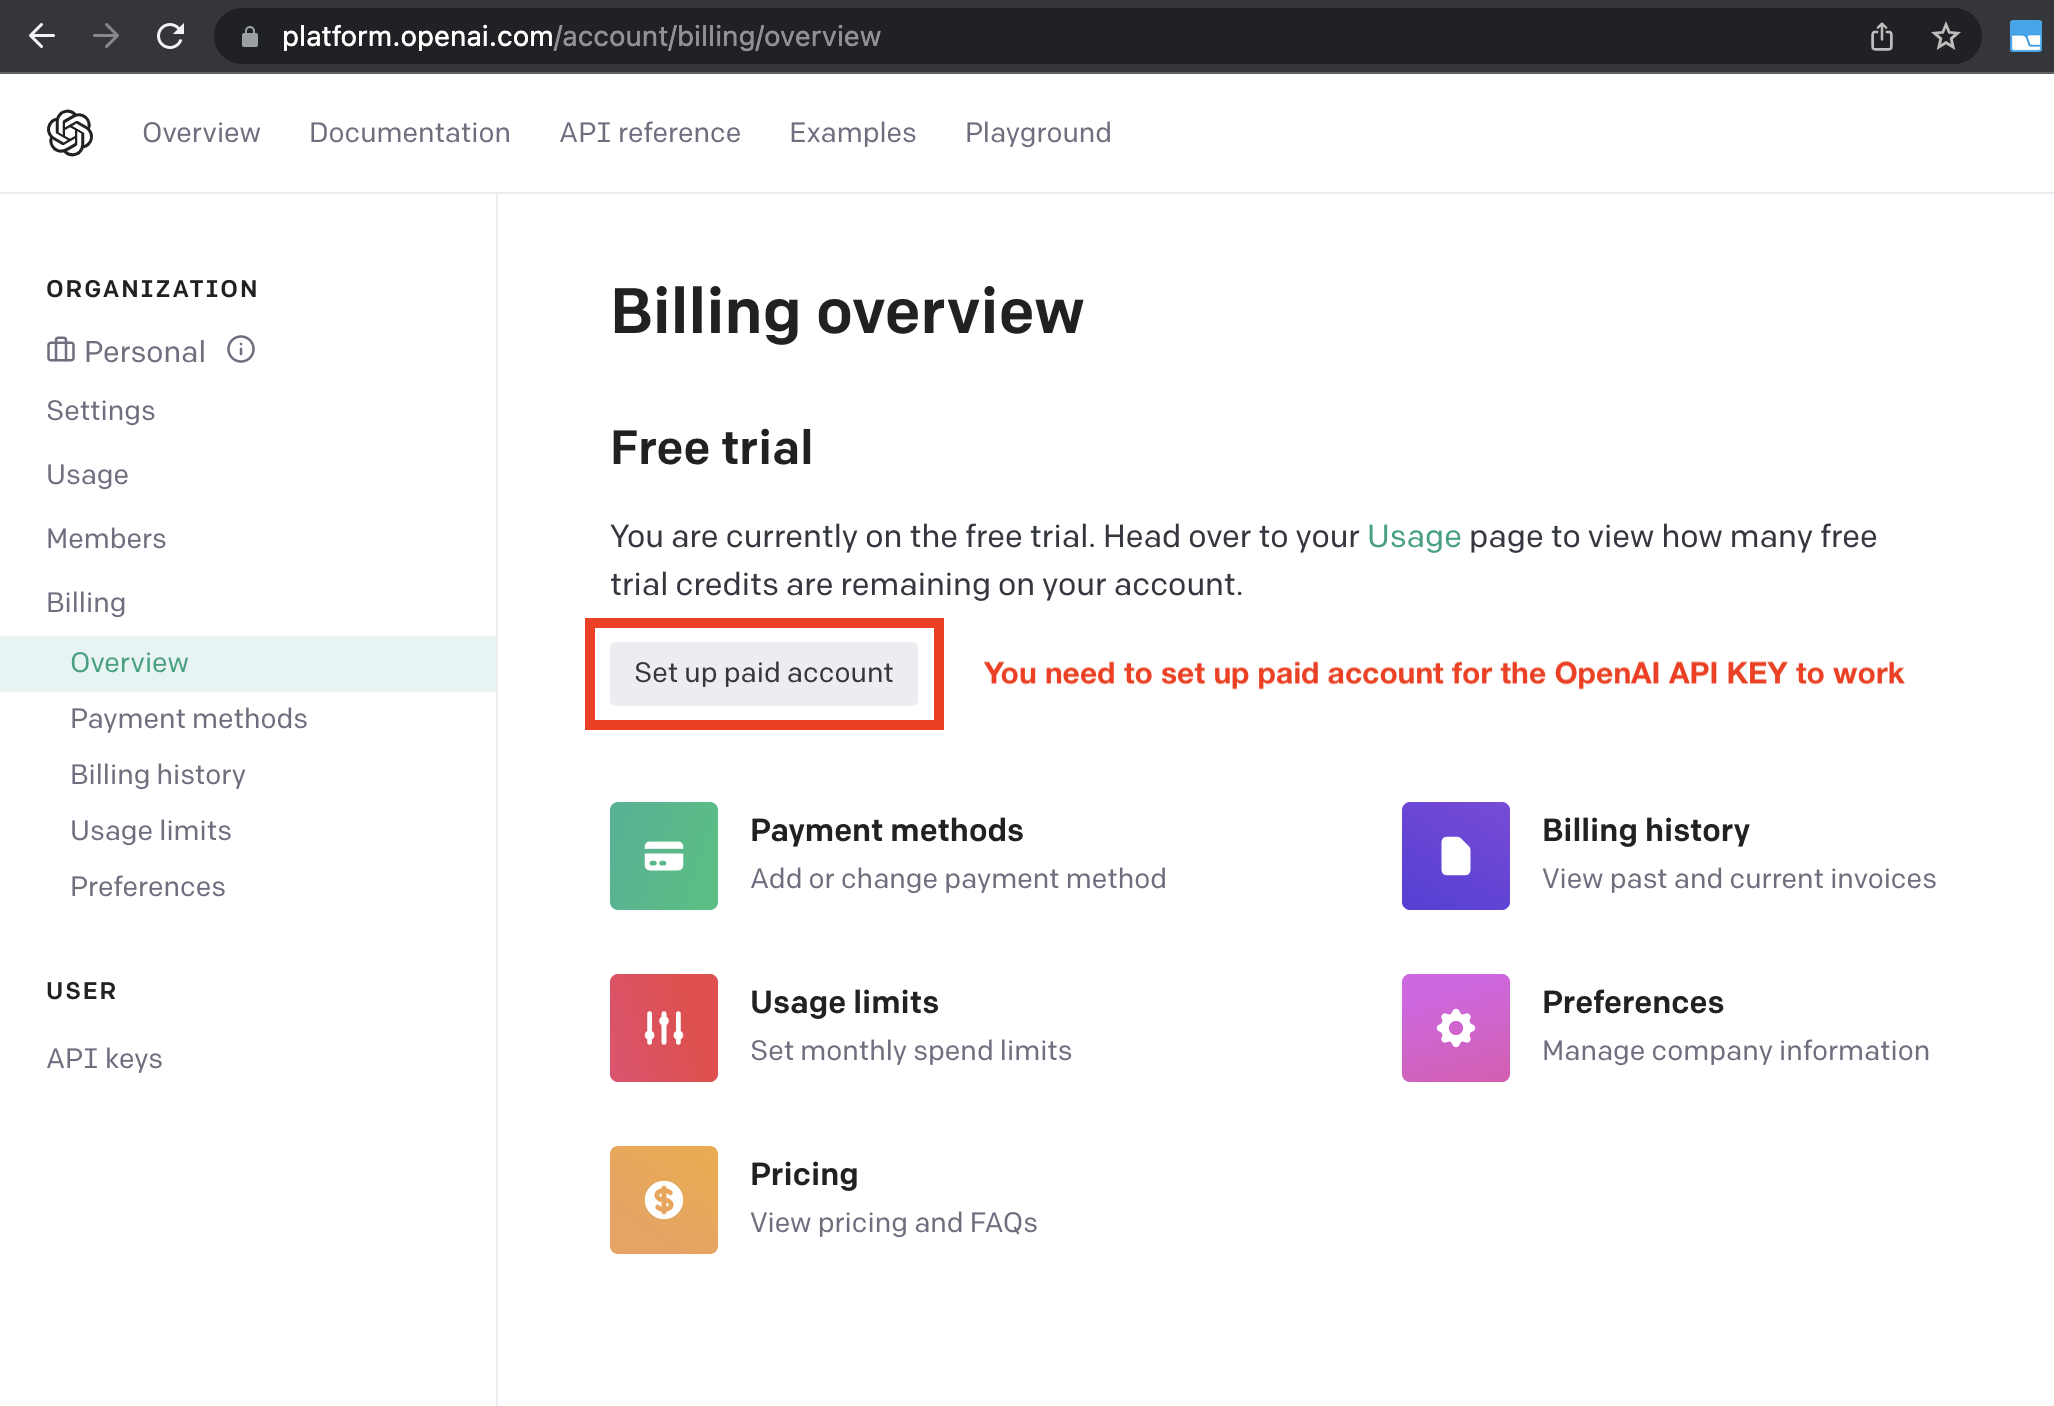 For OpenAI API key to work, set up paid account at OpenAI API > Billing